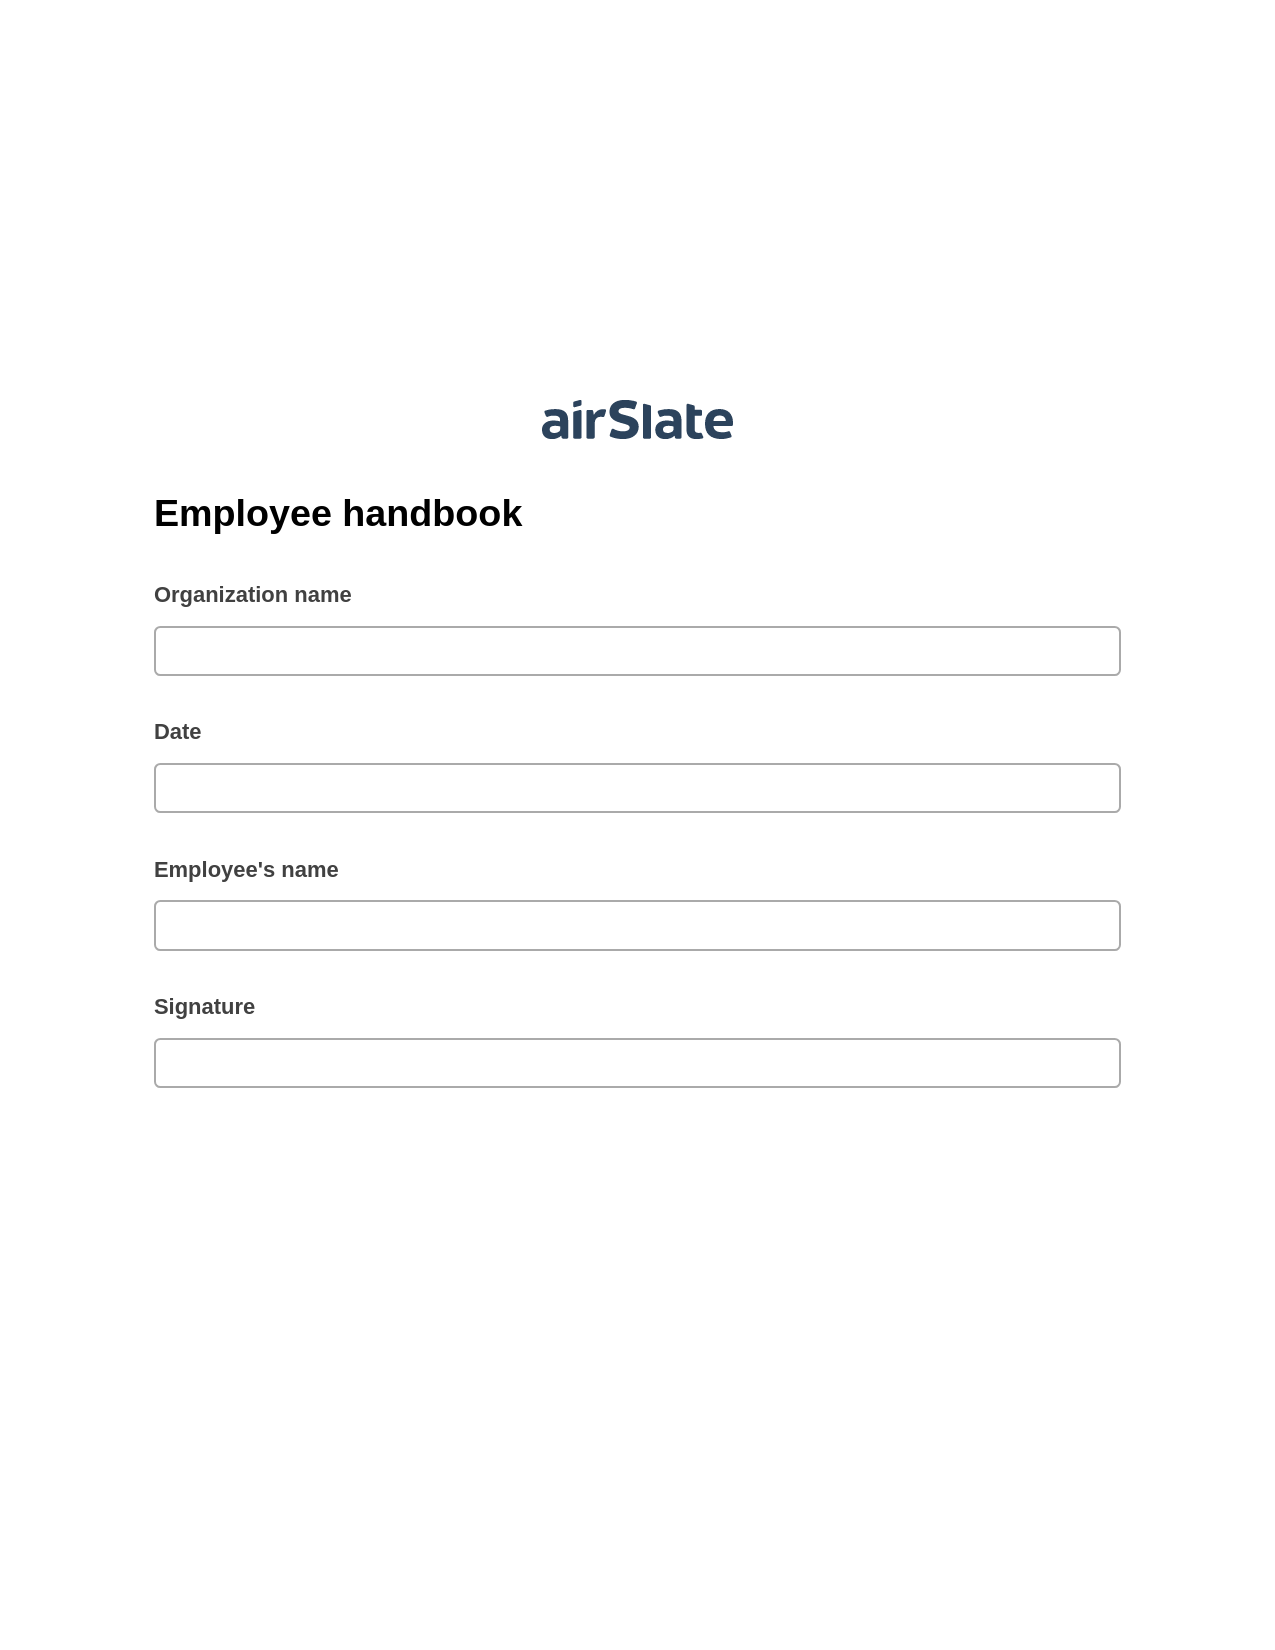 Employee handbook Pre-fill from MySQL Bot, Create Slate Reminder Bot, Archive to SharePoint Folder Bot